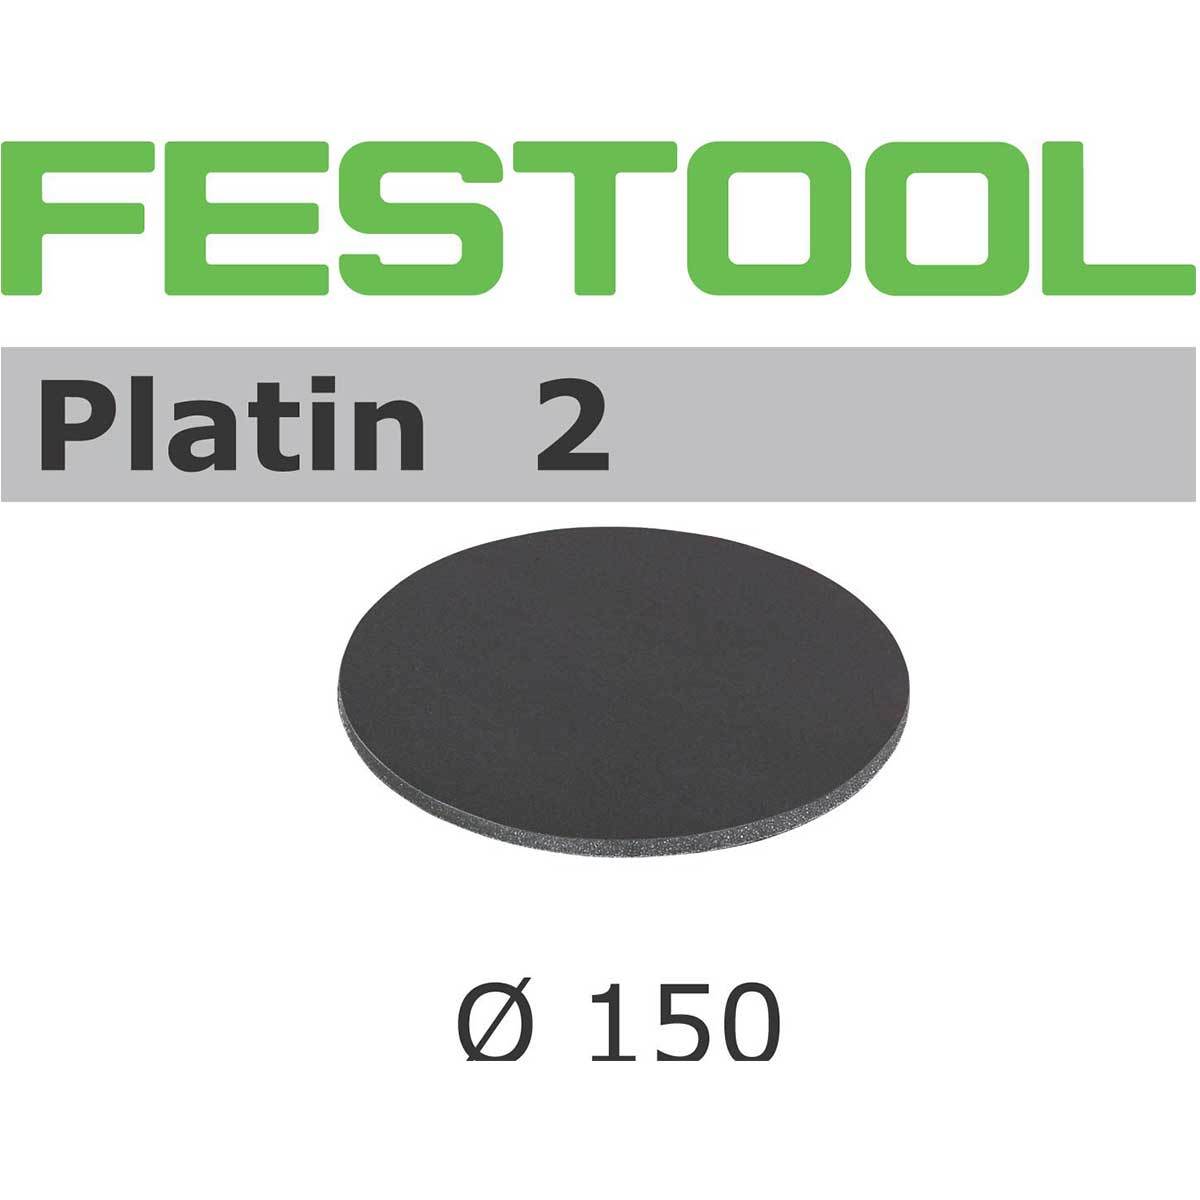 Festool 150mm Platin 2 abrasive discs are foam-backed silicon carbide abrasives for super-fine finishing.